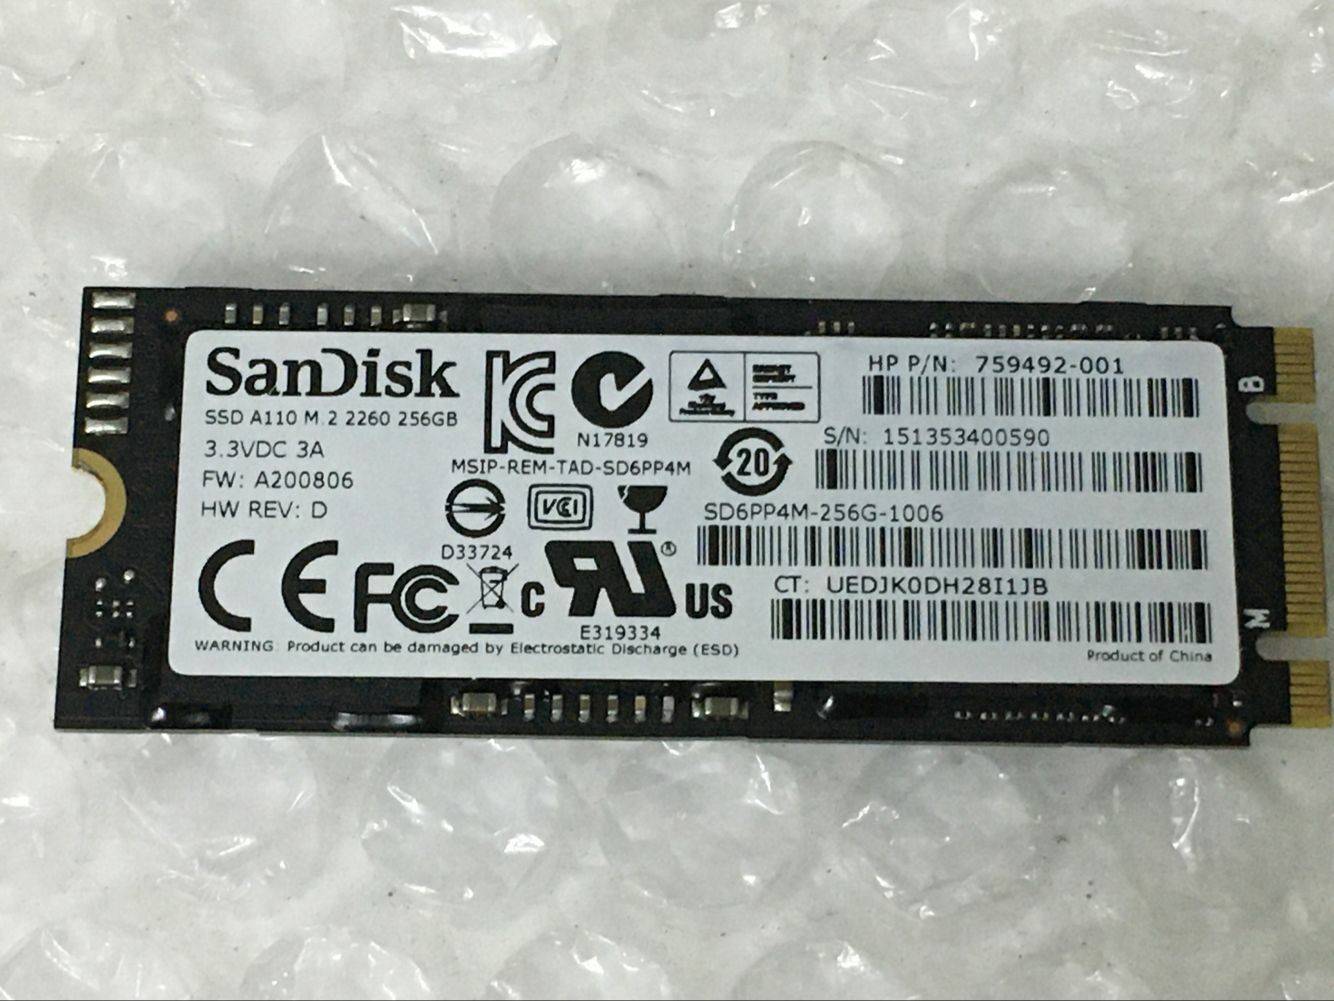 256GB SSD A110 SD6PP4M-256G-1006 M.2 2260 256GB PCIe NVMe for HP Zbook G2 Laptop